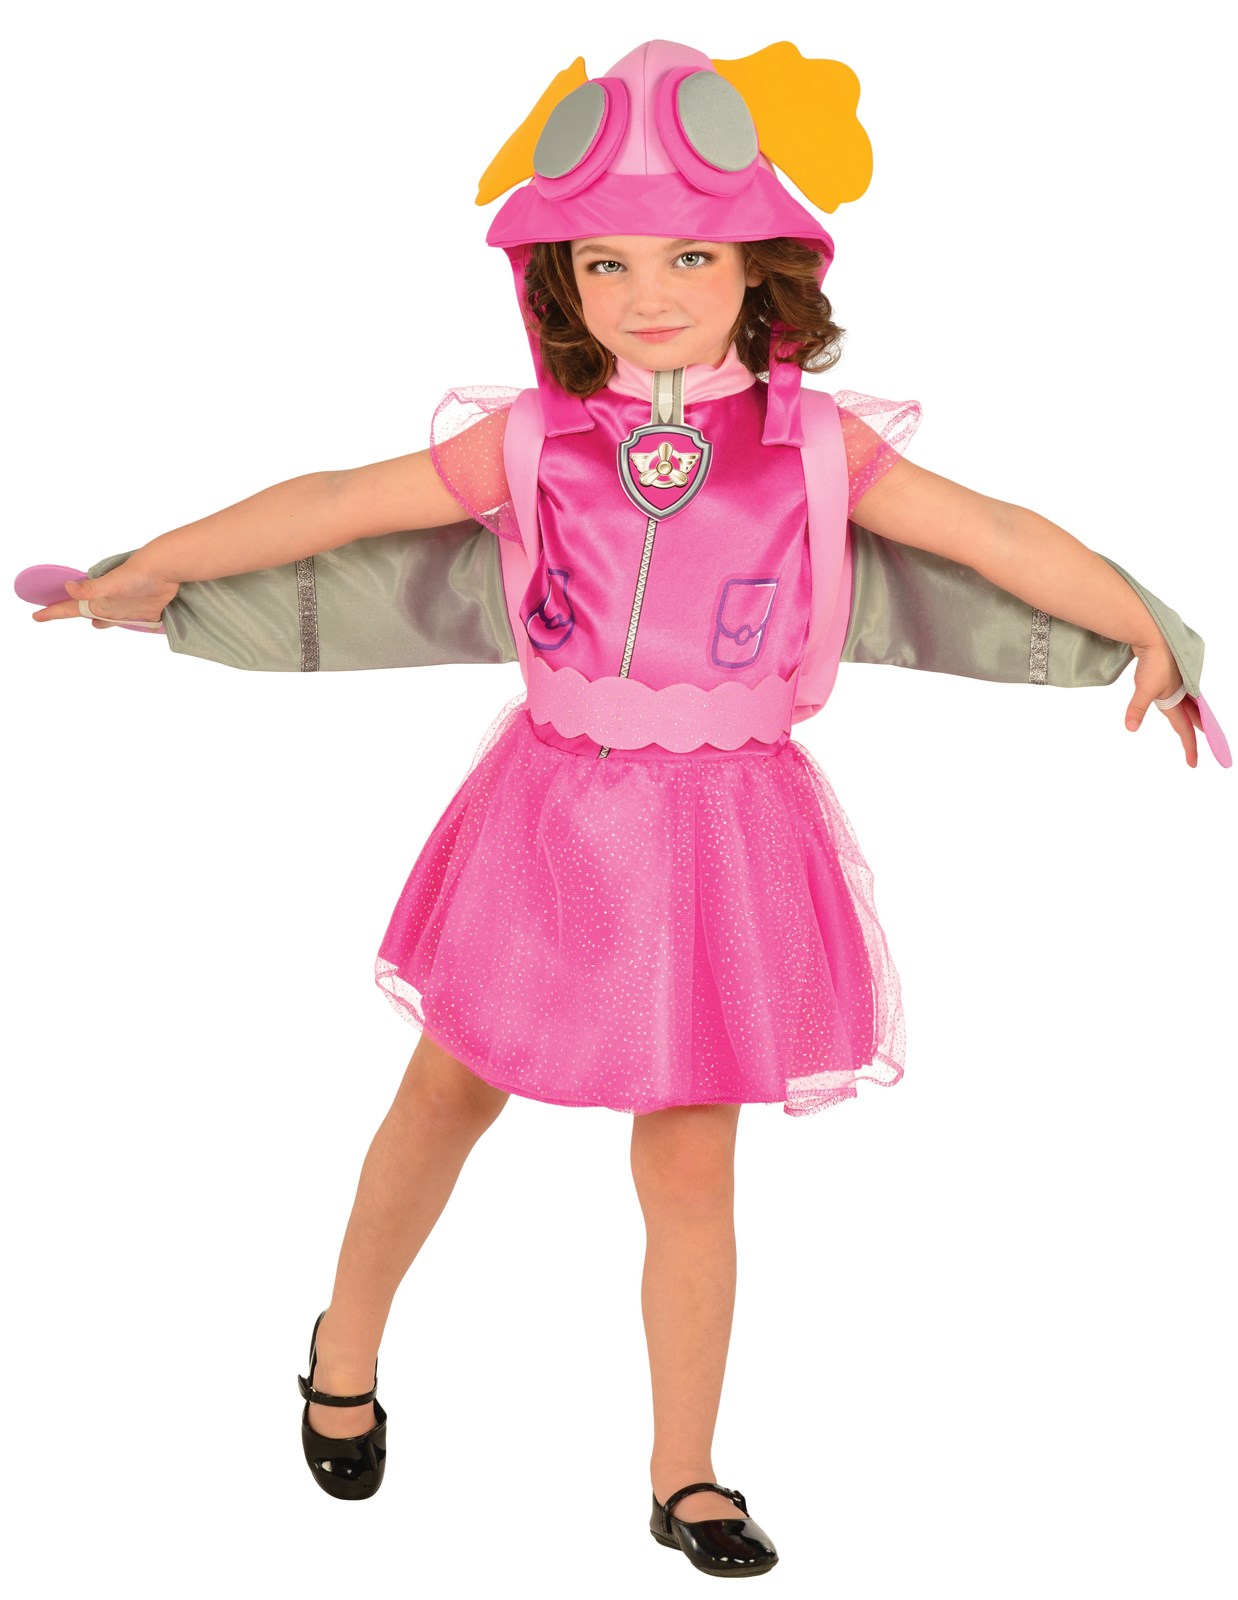 Paw Patrol - Skye Toddler/Child Costume